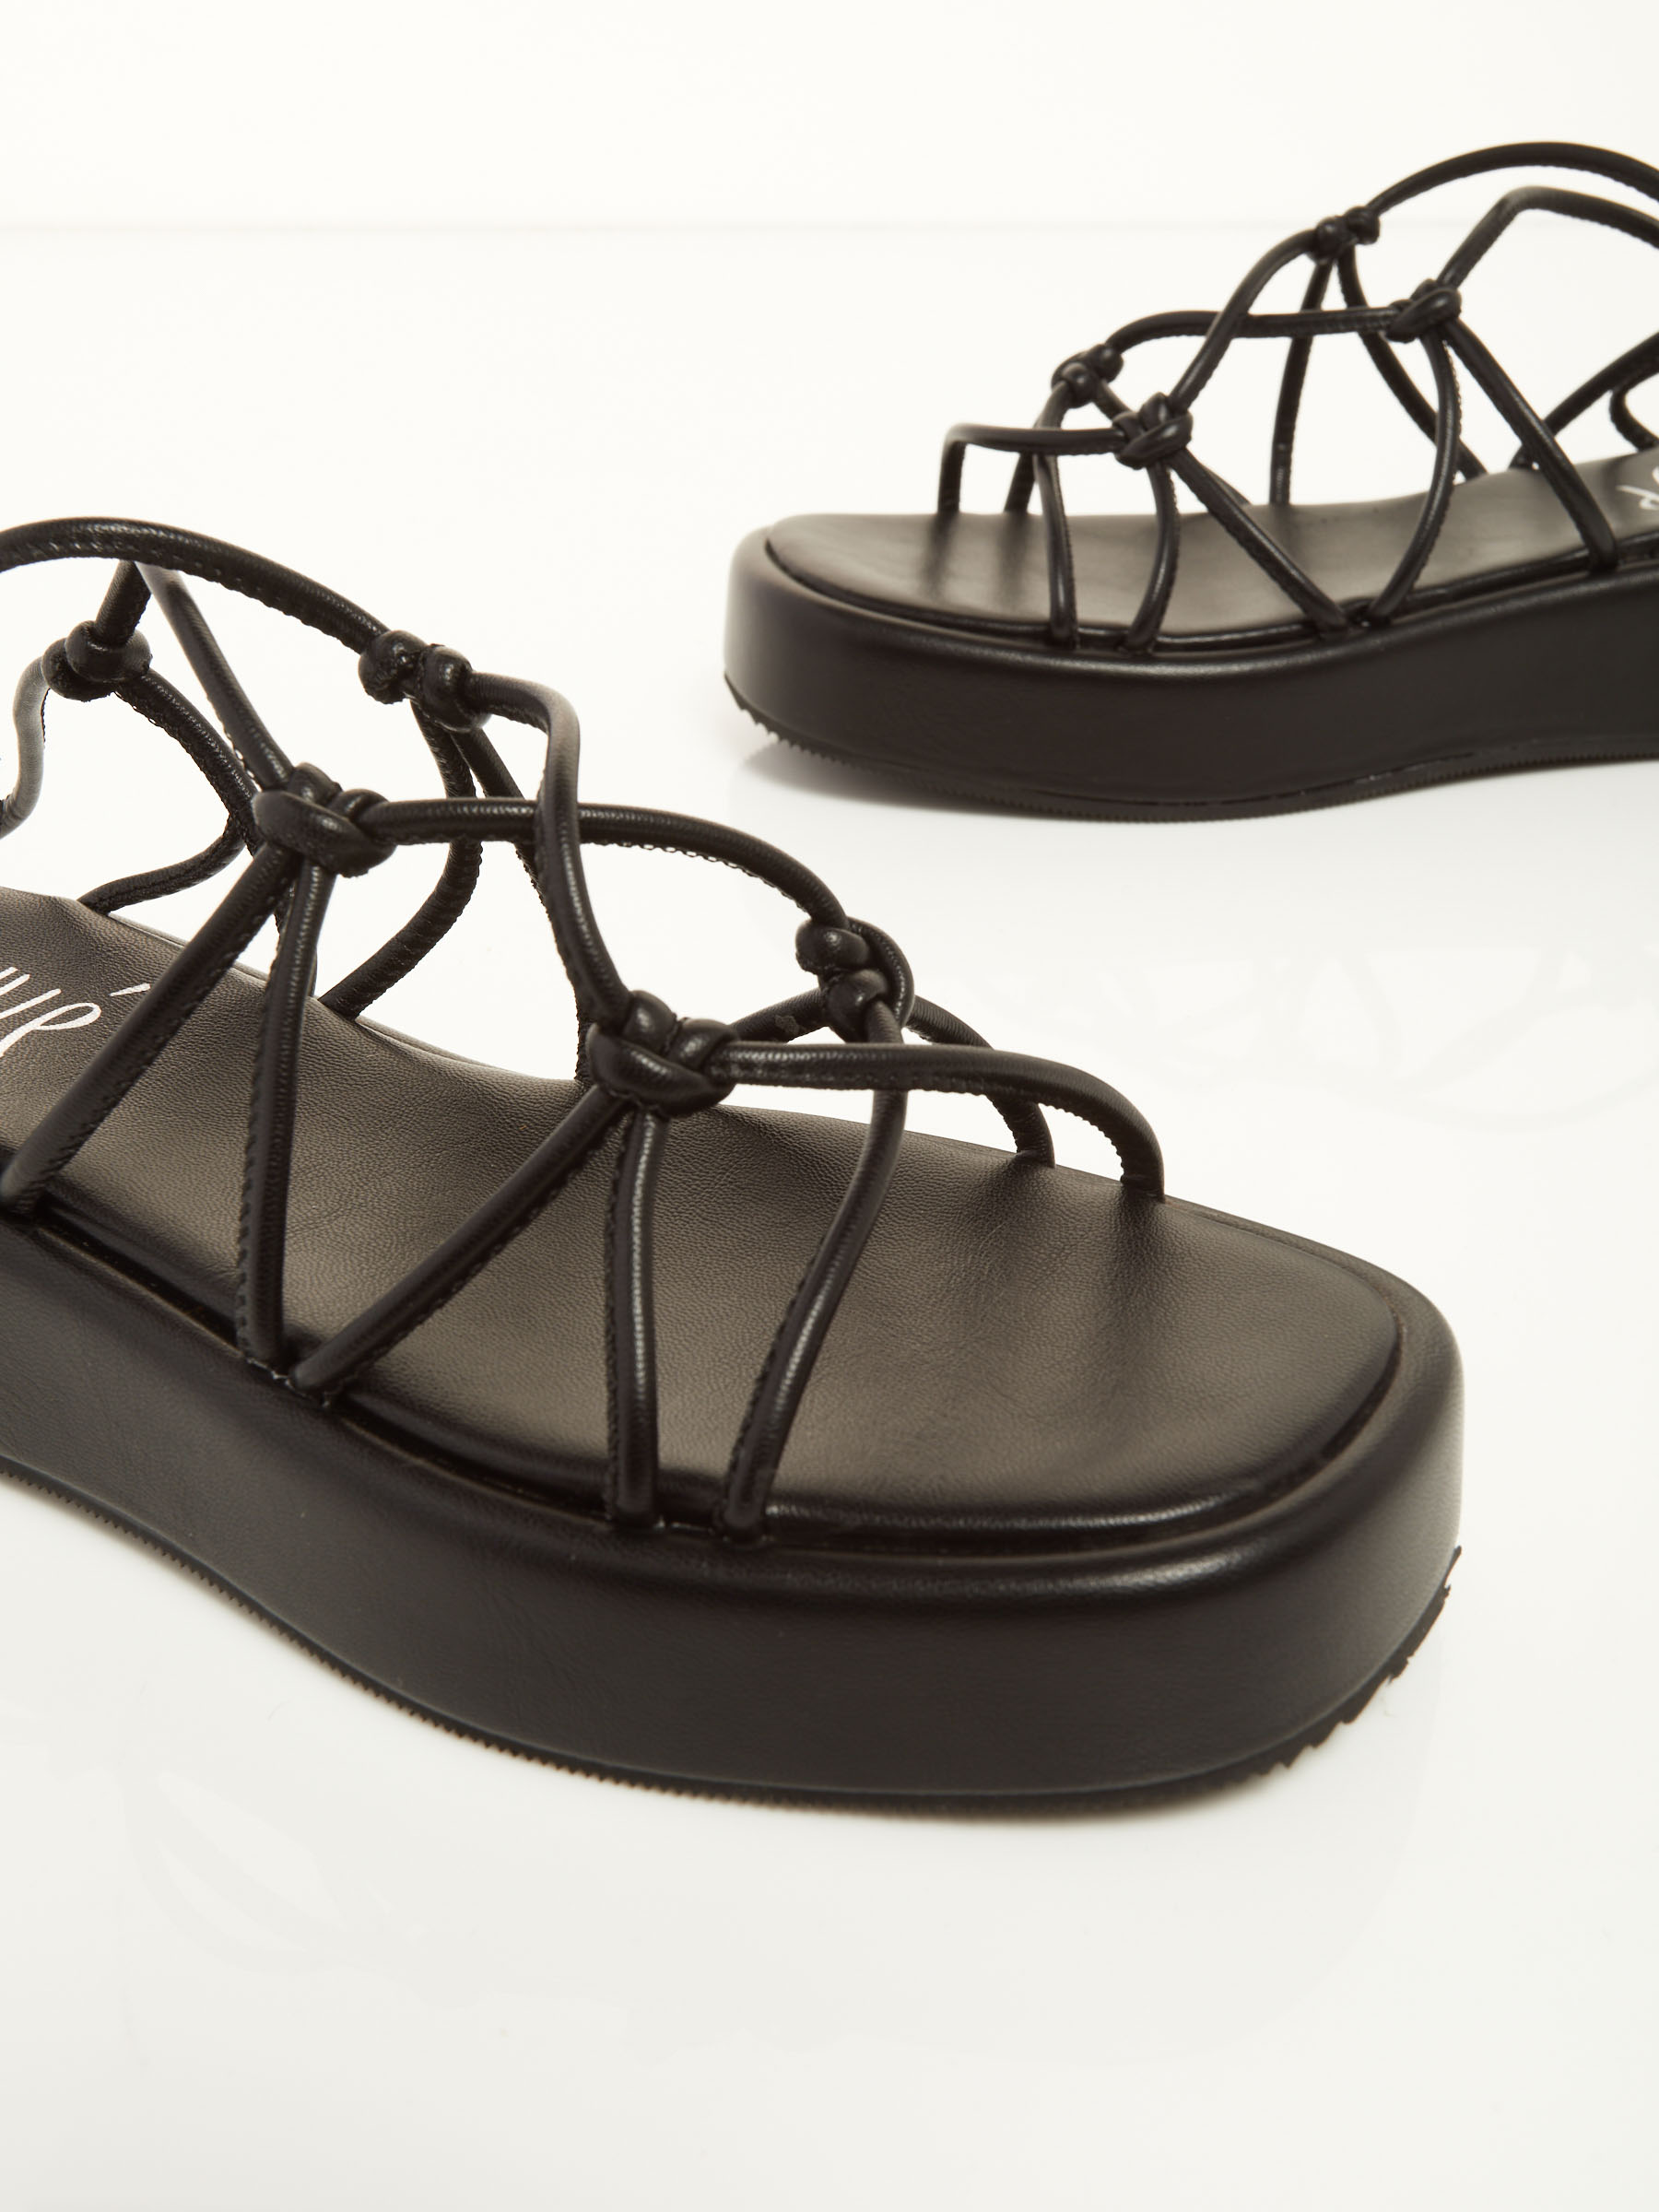 Codice Sconto Greek Flat Sandals F0545554-0451 Al 70 Outlet